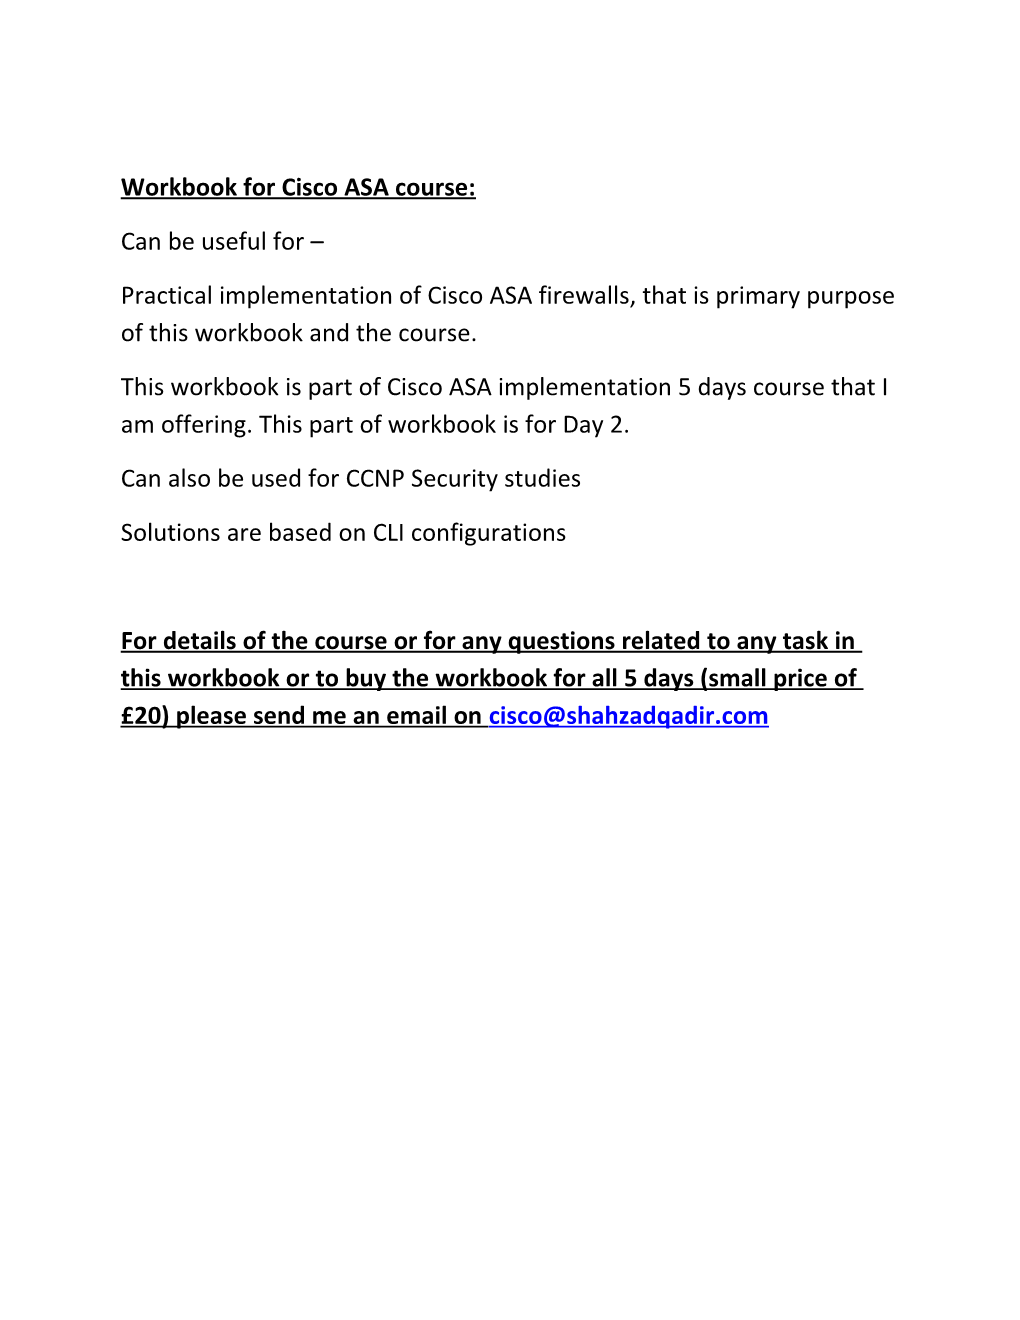 Workbook for Cisco ASA Course